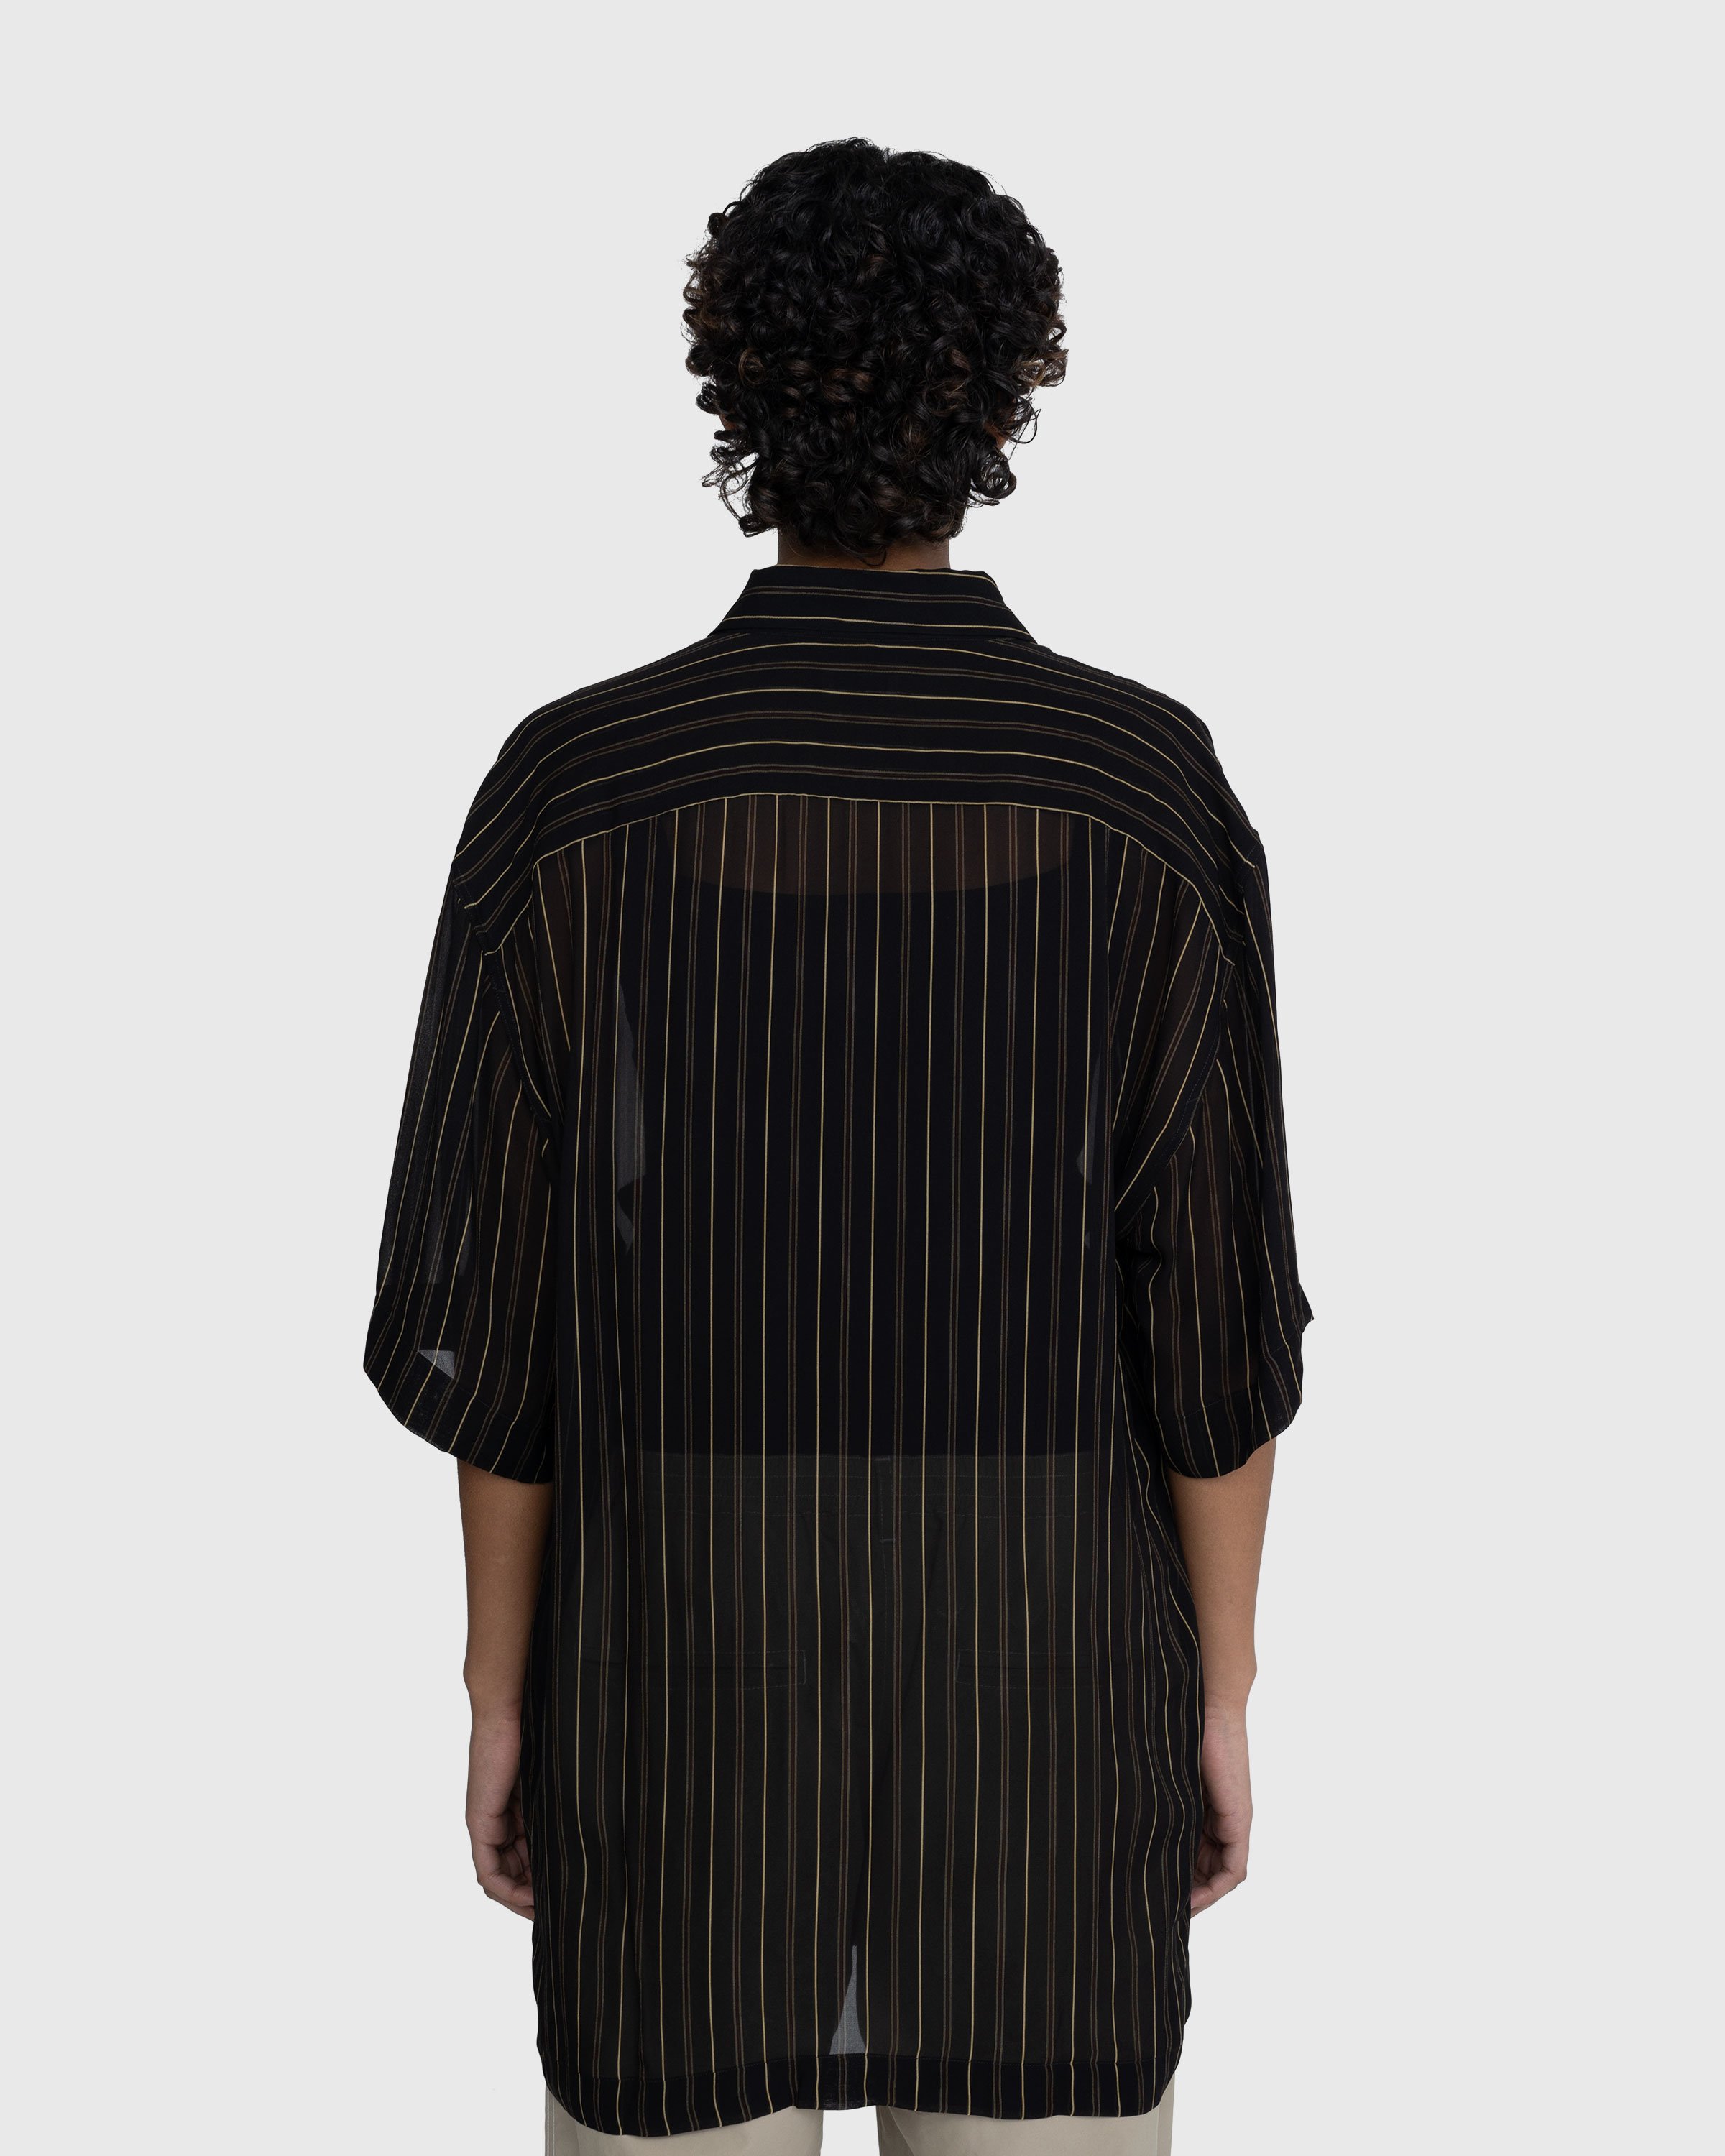 Dries van Noten - Cassidye Shirt Black - Clothing - Black - Image 3